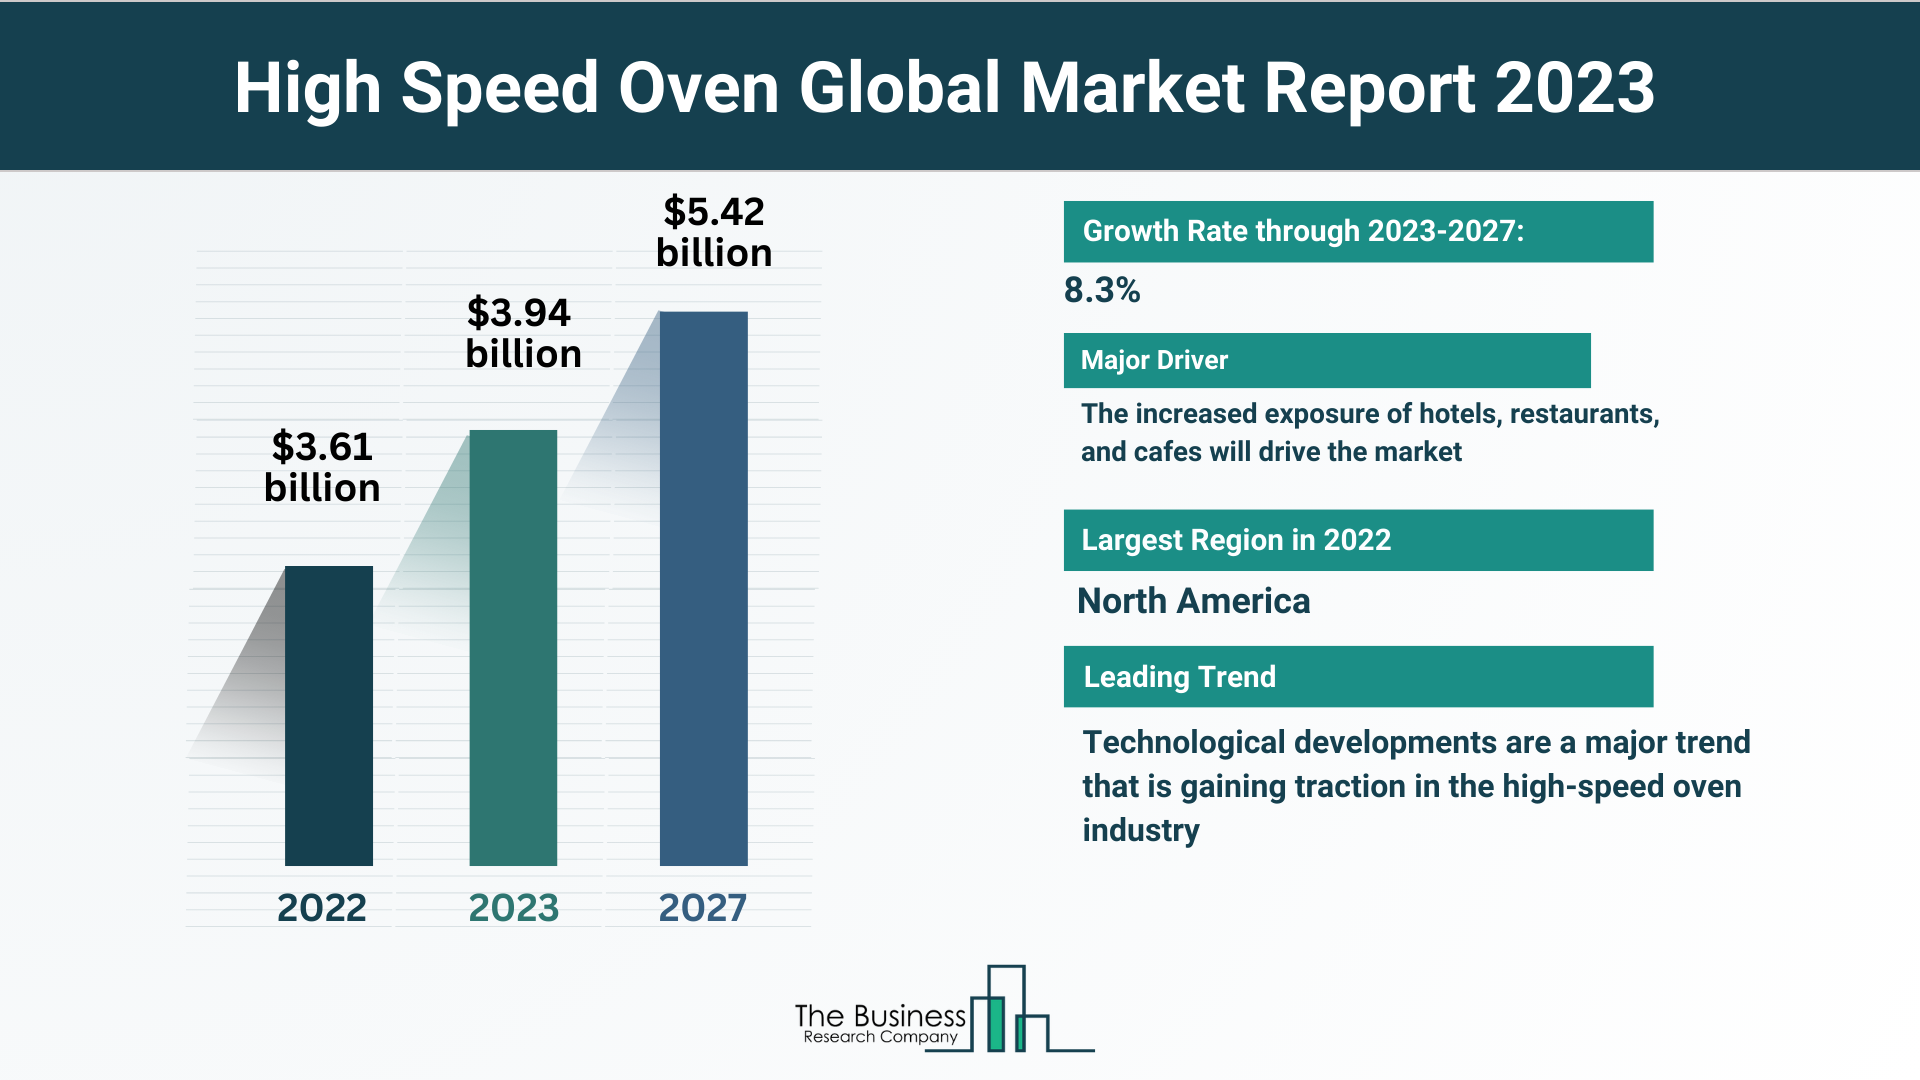 Global High Speed Oven Market